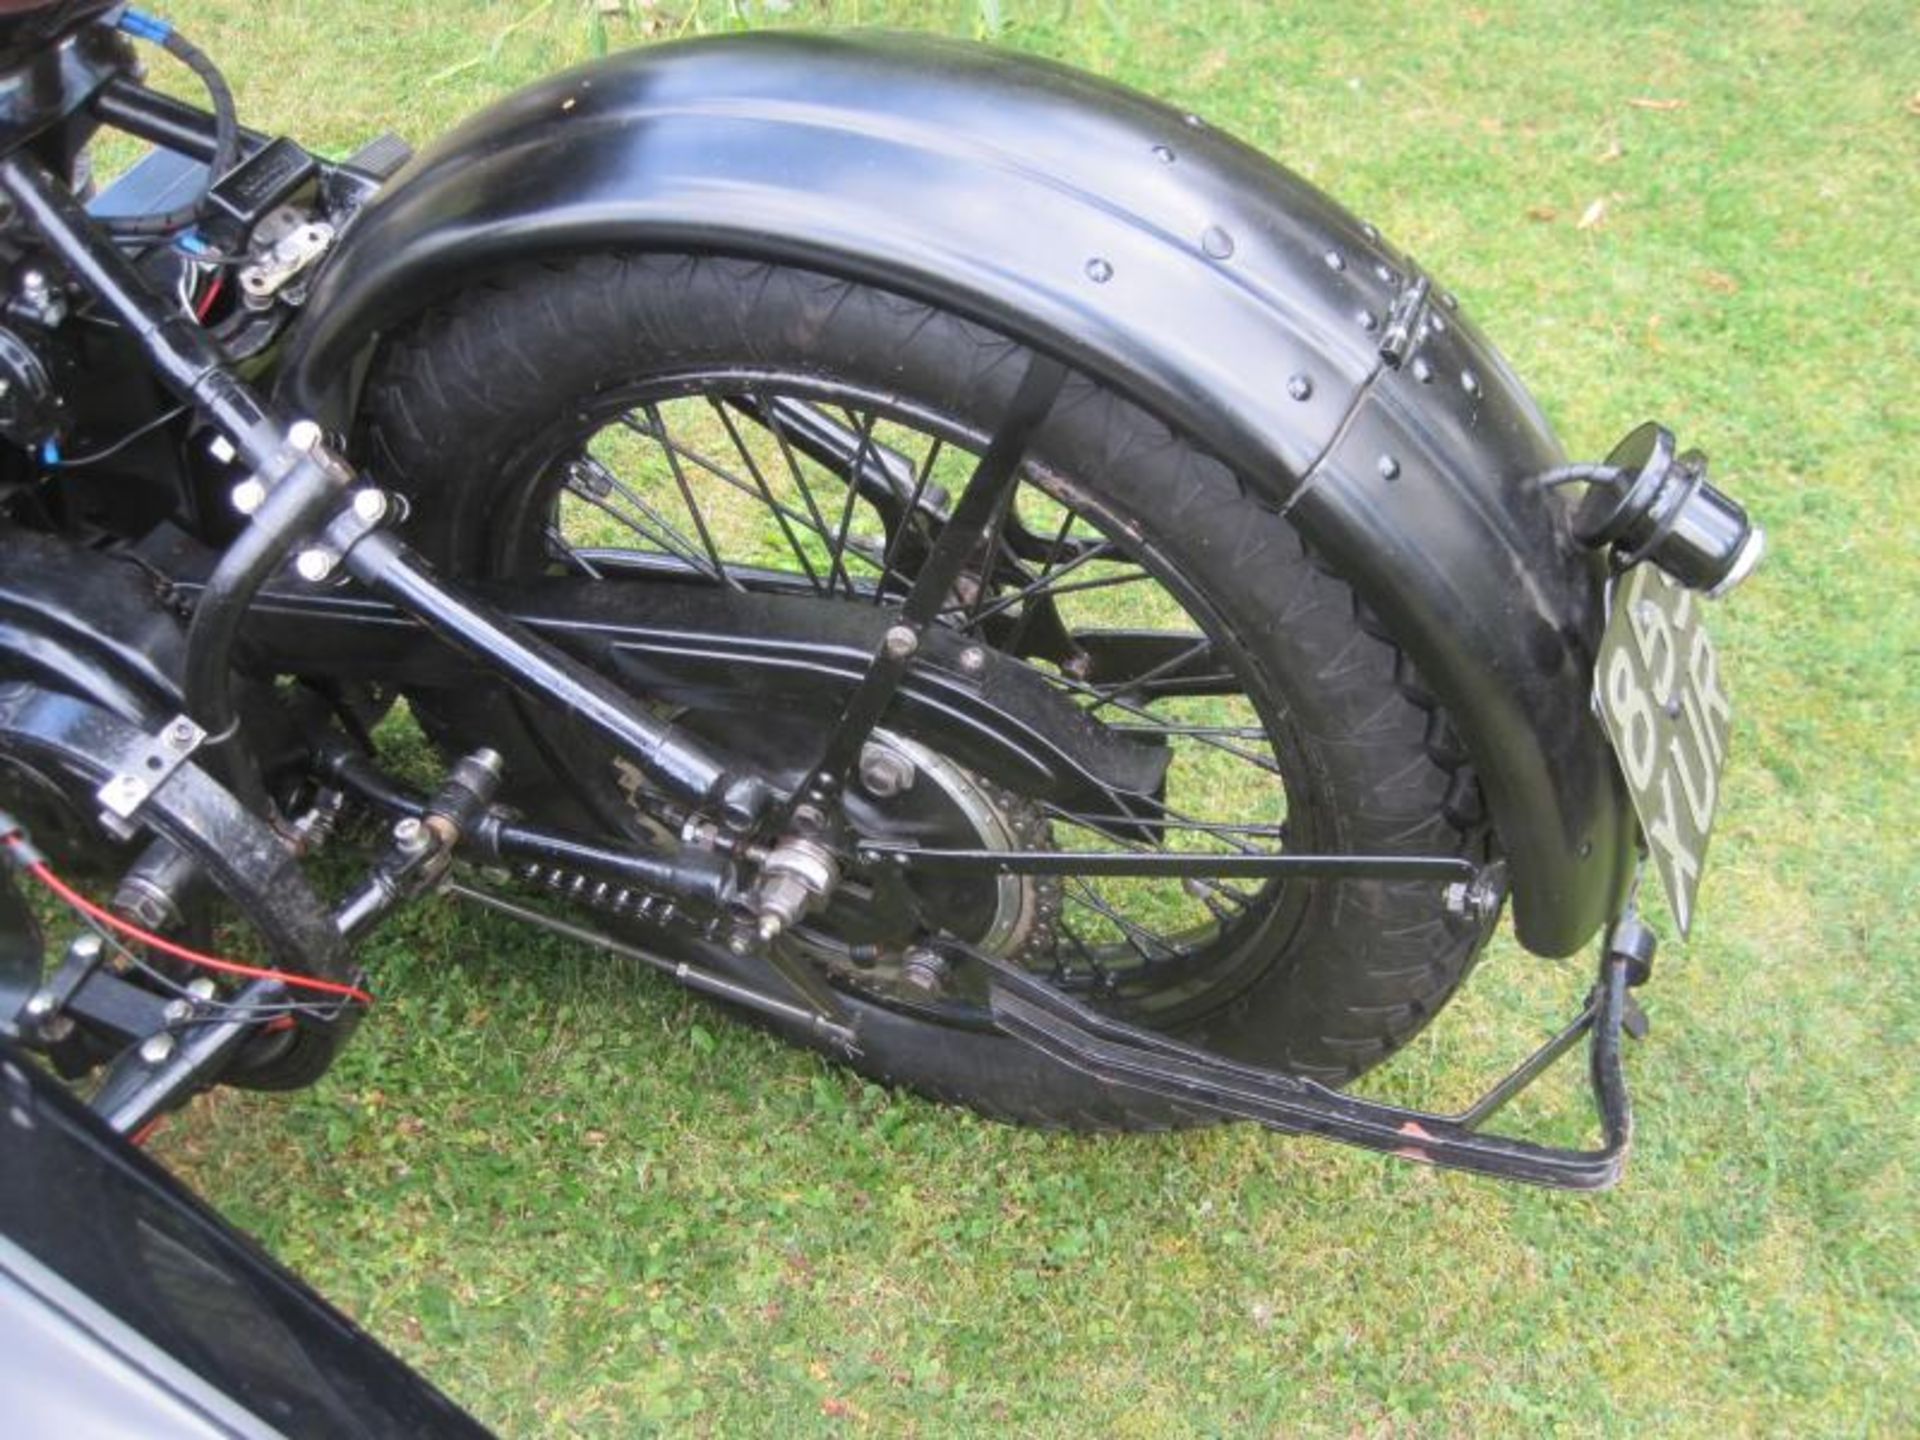 1931 1200cc Harley Davidson VL / Swallow outfit Reg. No. 859 UXR Frame No. 31VL3684 Engine No. - Image 13 of 13